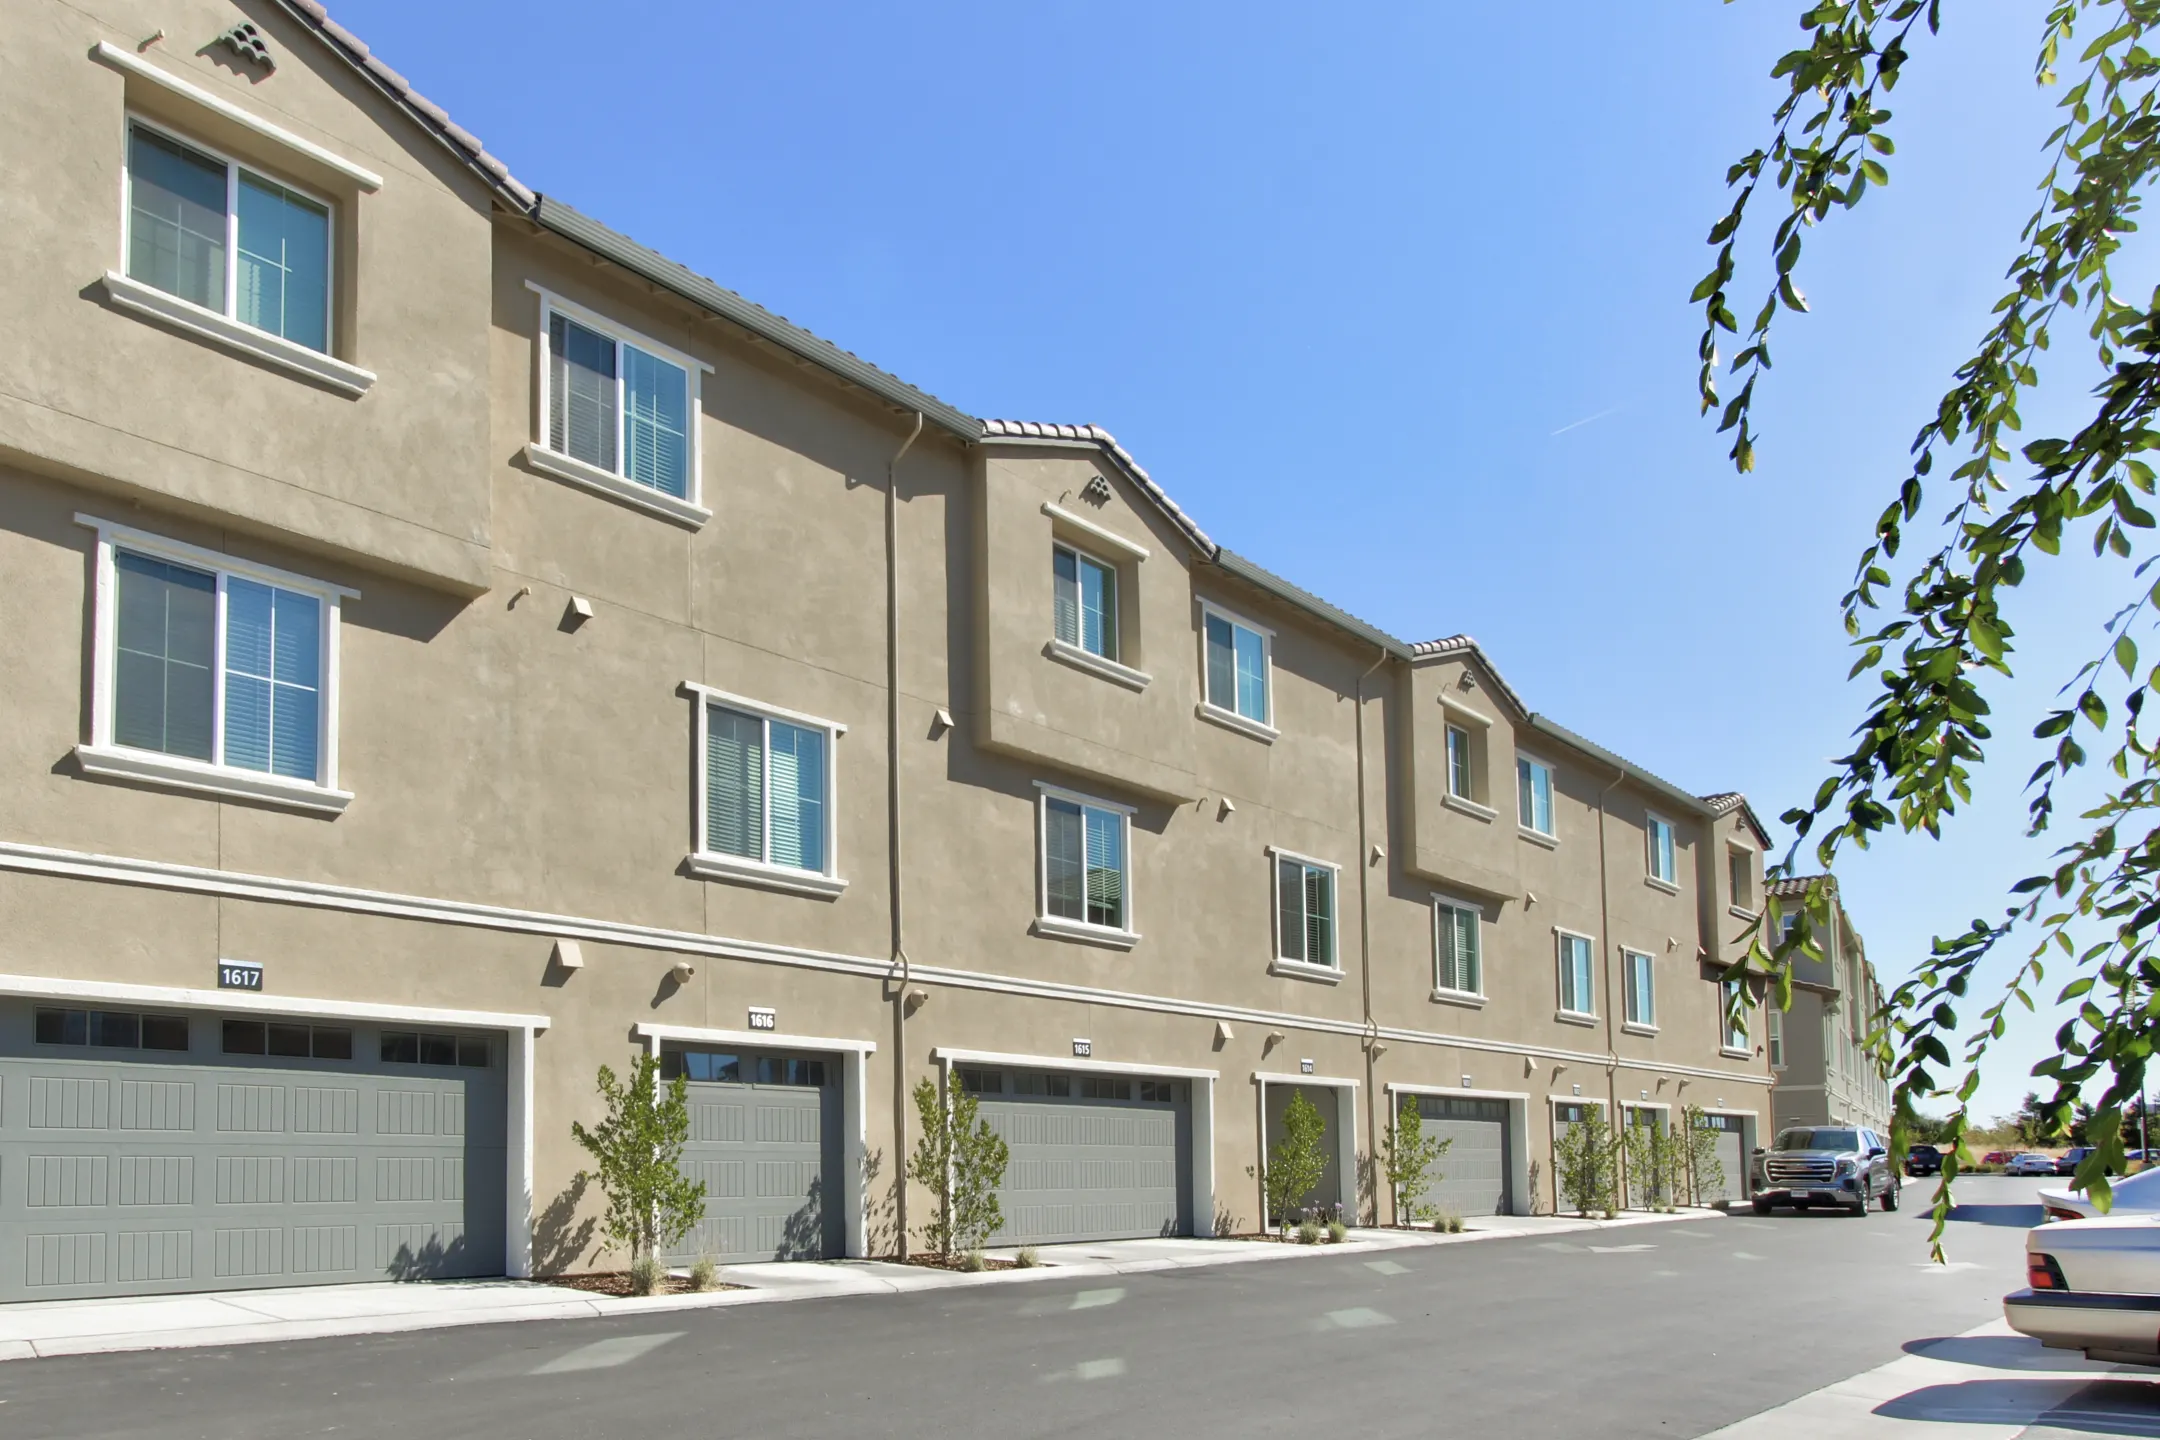 Building - Campus Oaks Apartments - Roseville, CA